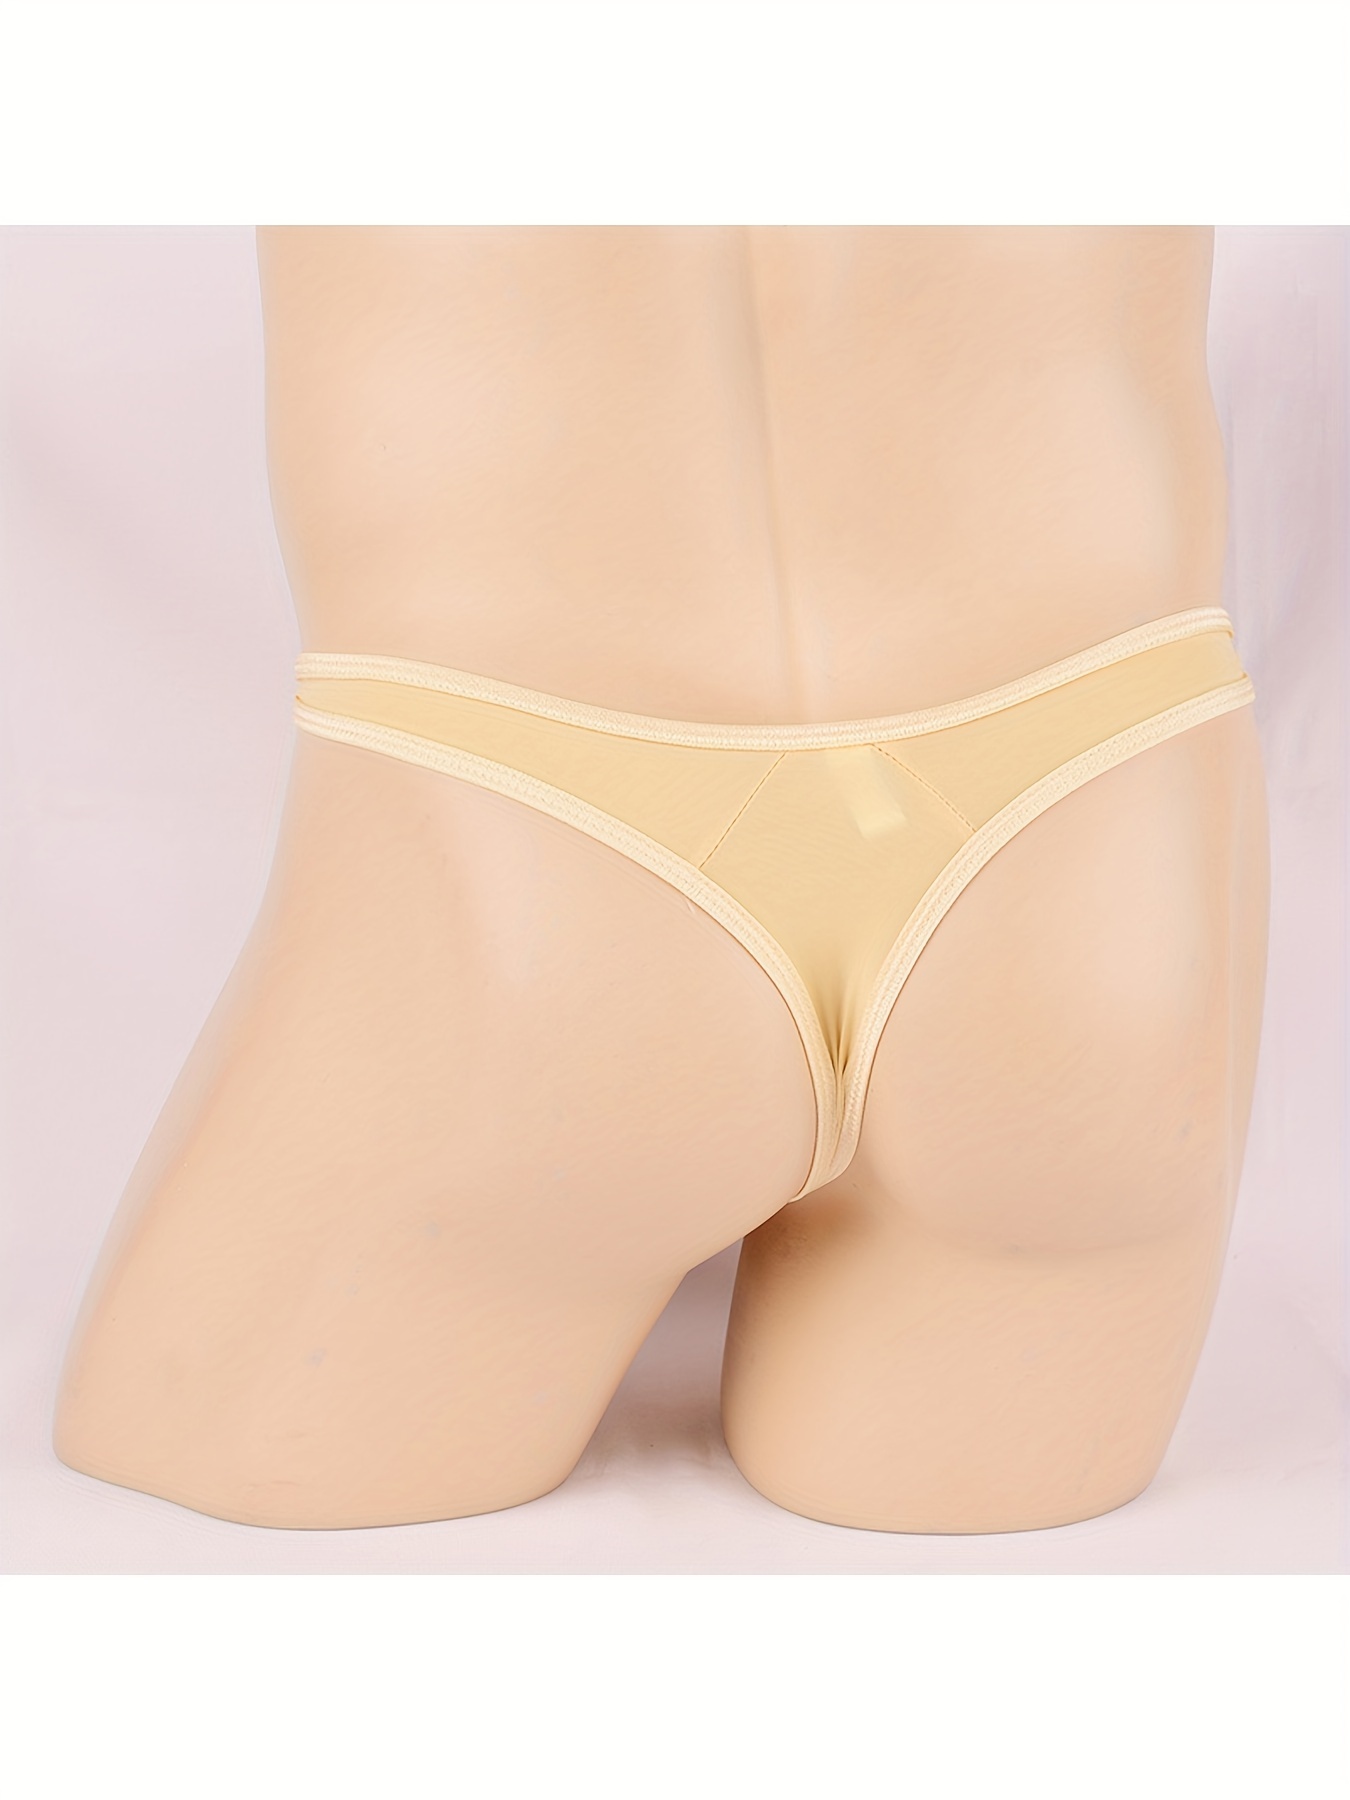 Women Transparent Ultra-thin Ladies Sexy G-string Underwear Thong Panties  Underp